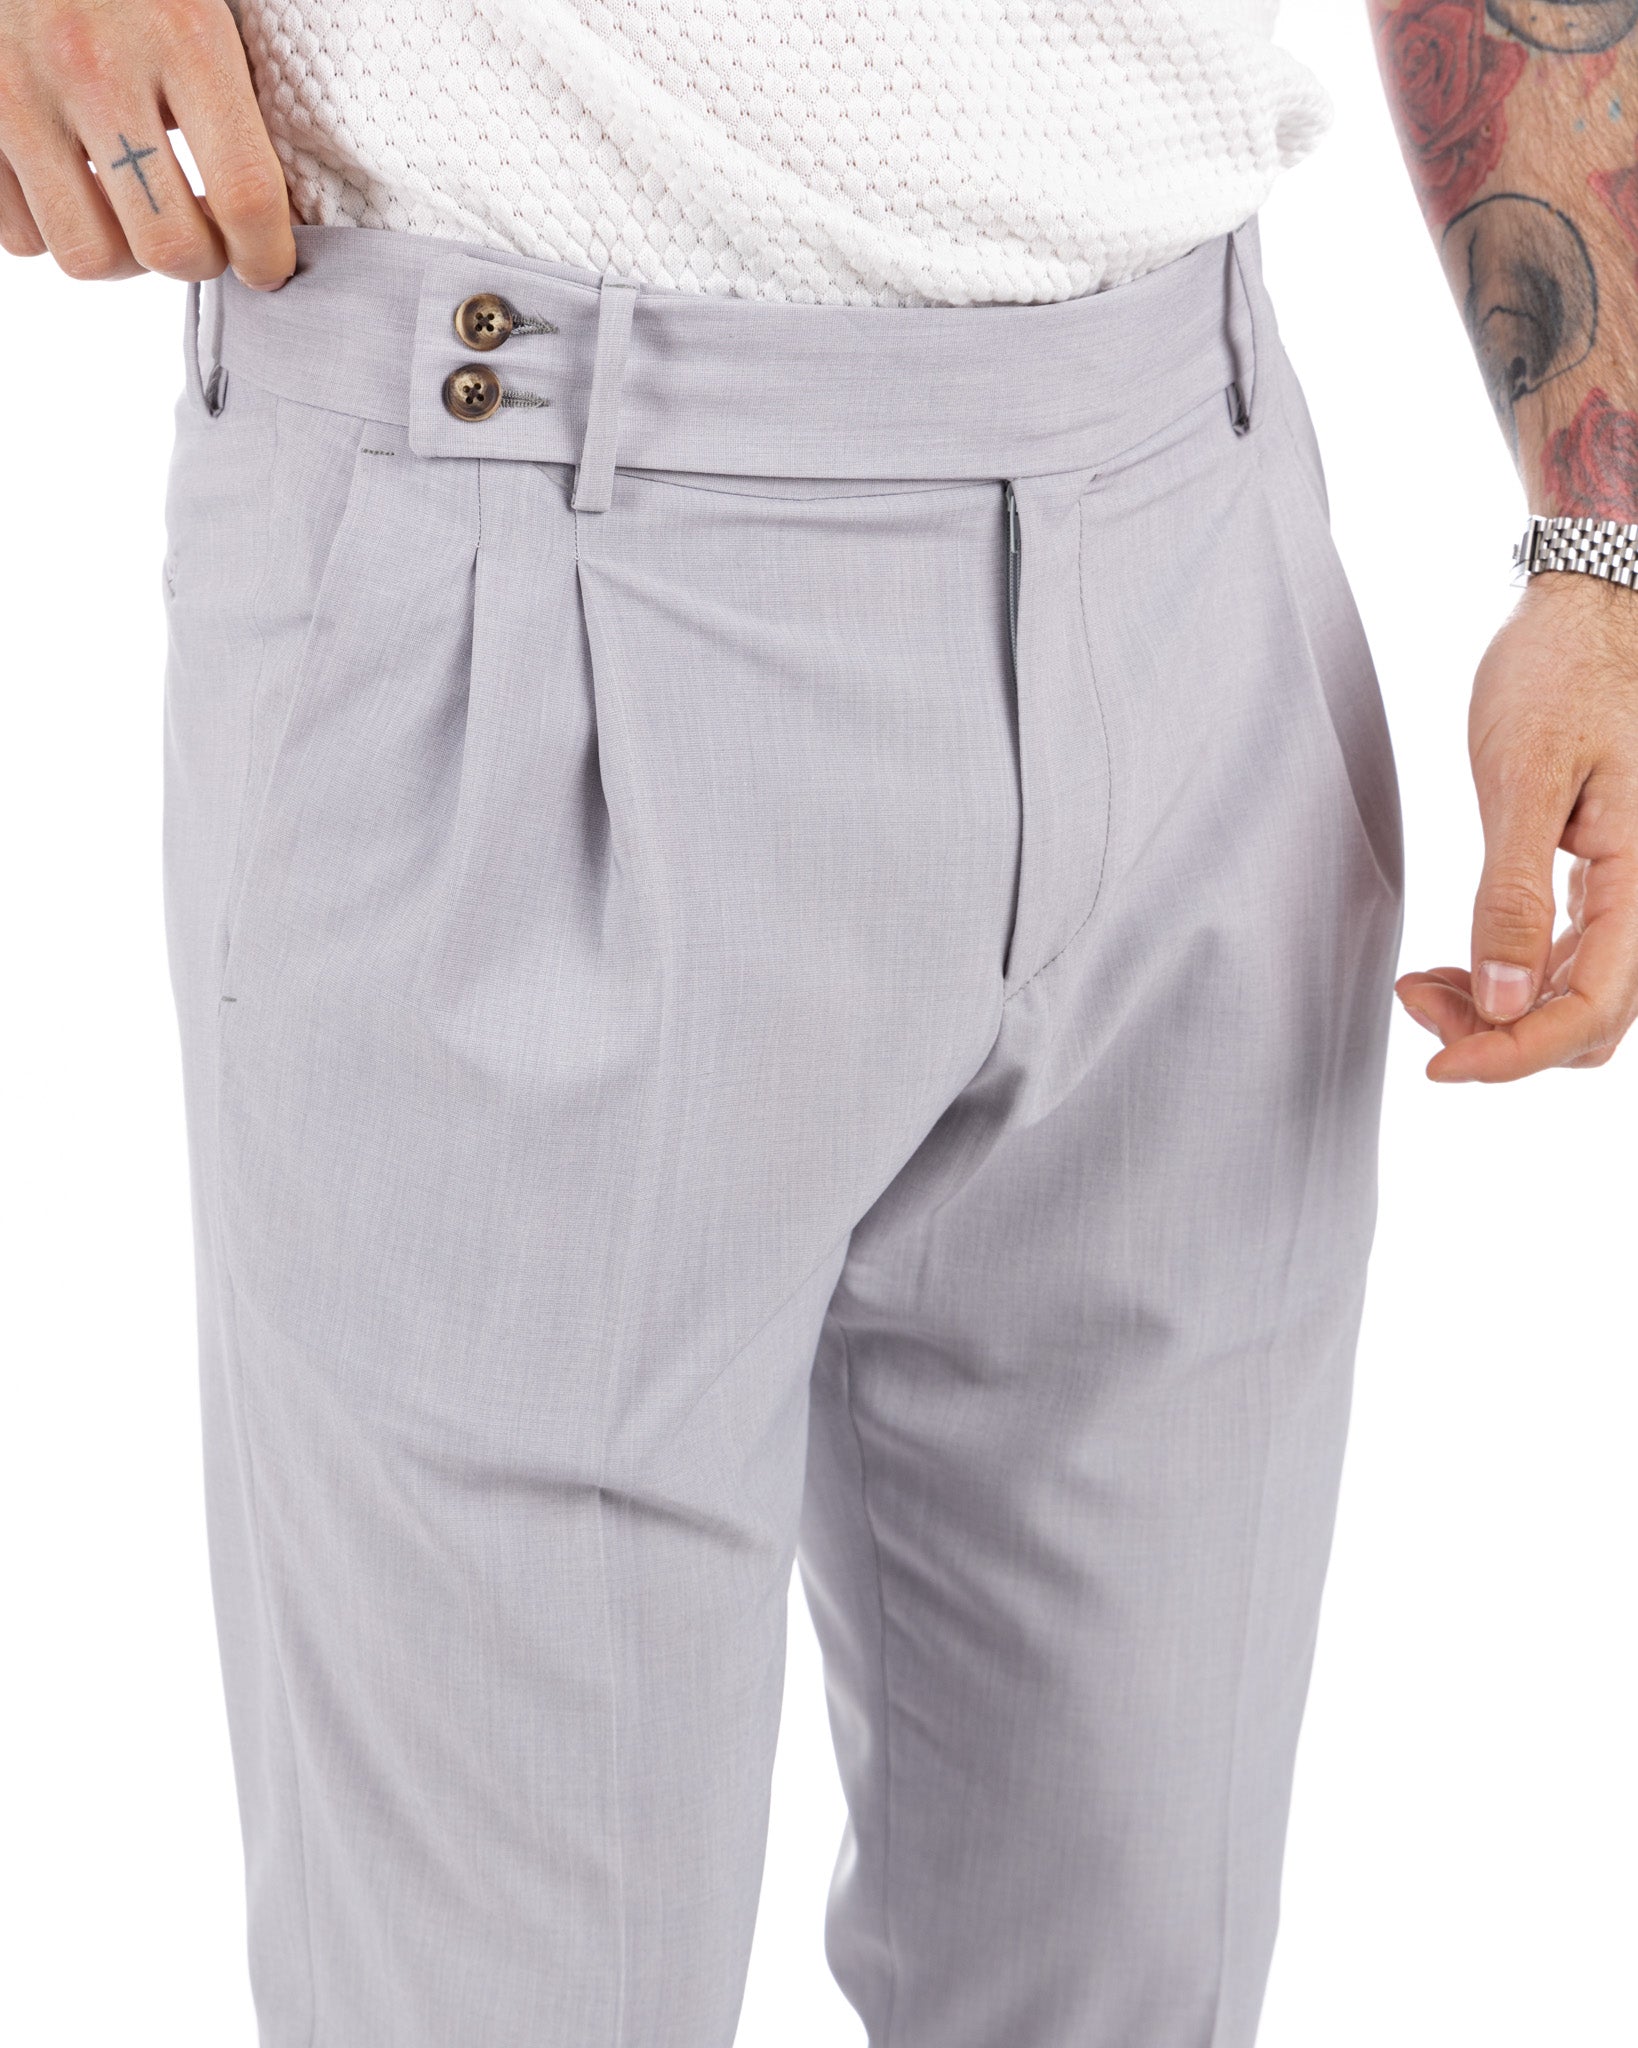 Caprera - gray high waisted trousers